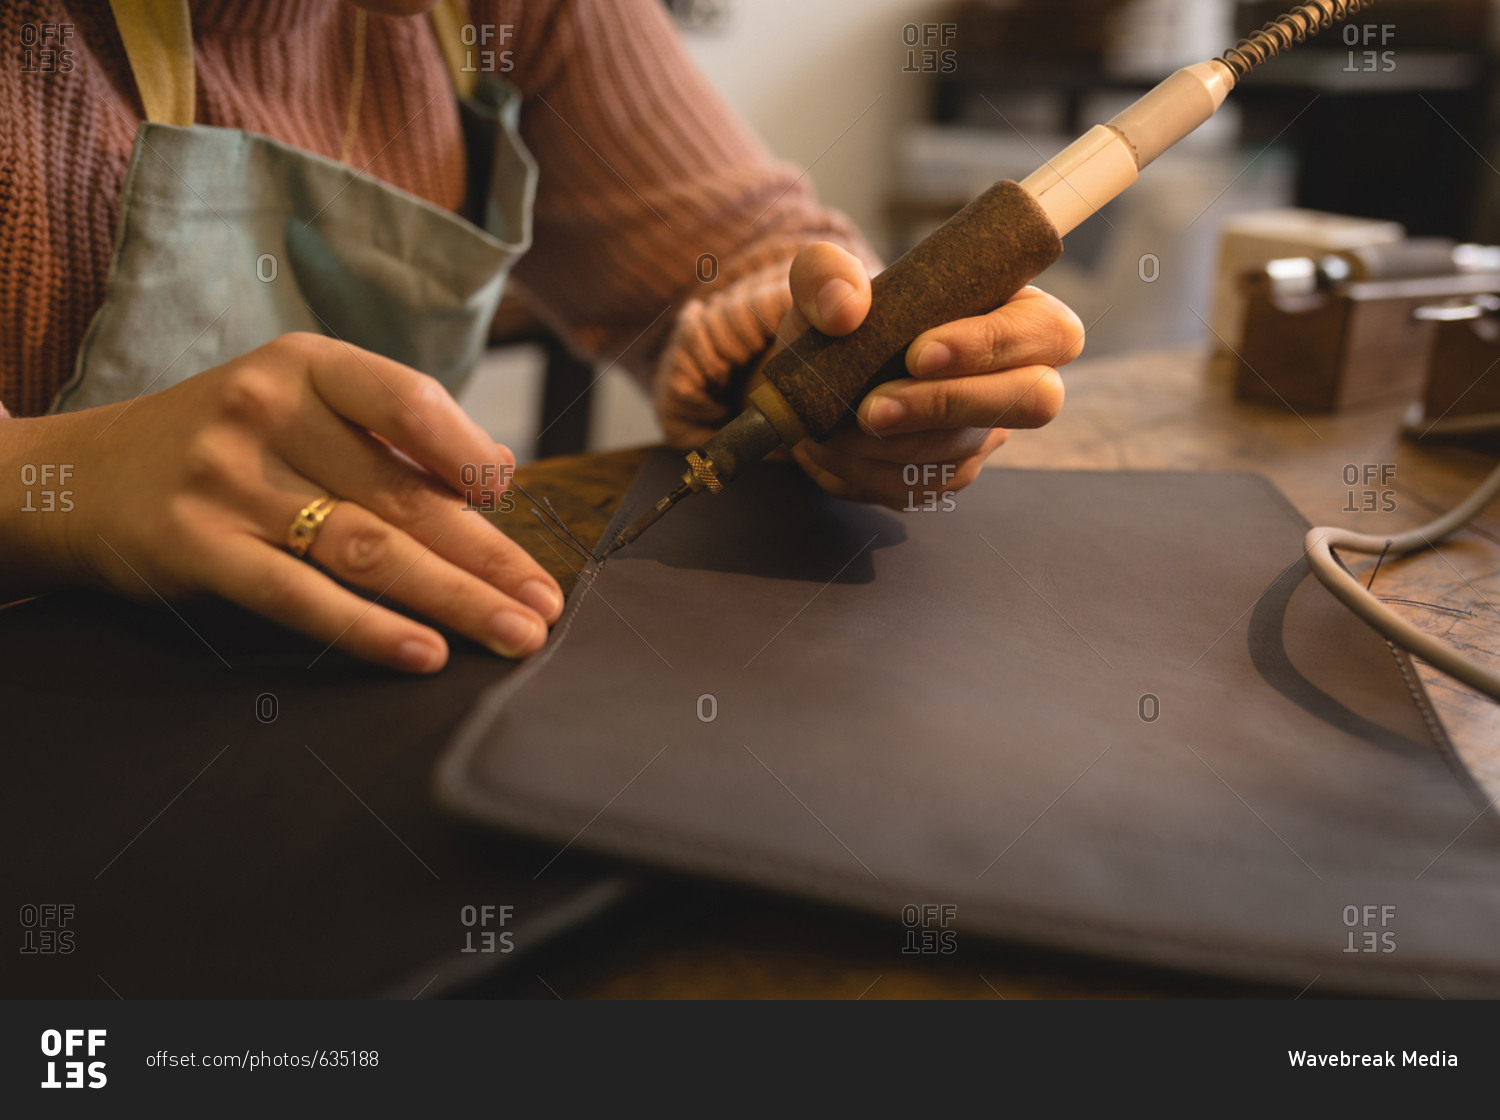 Worker stitching leather with stitching machine in workshop